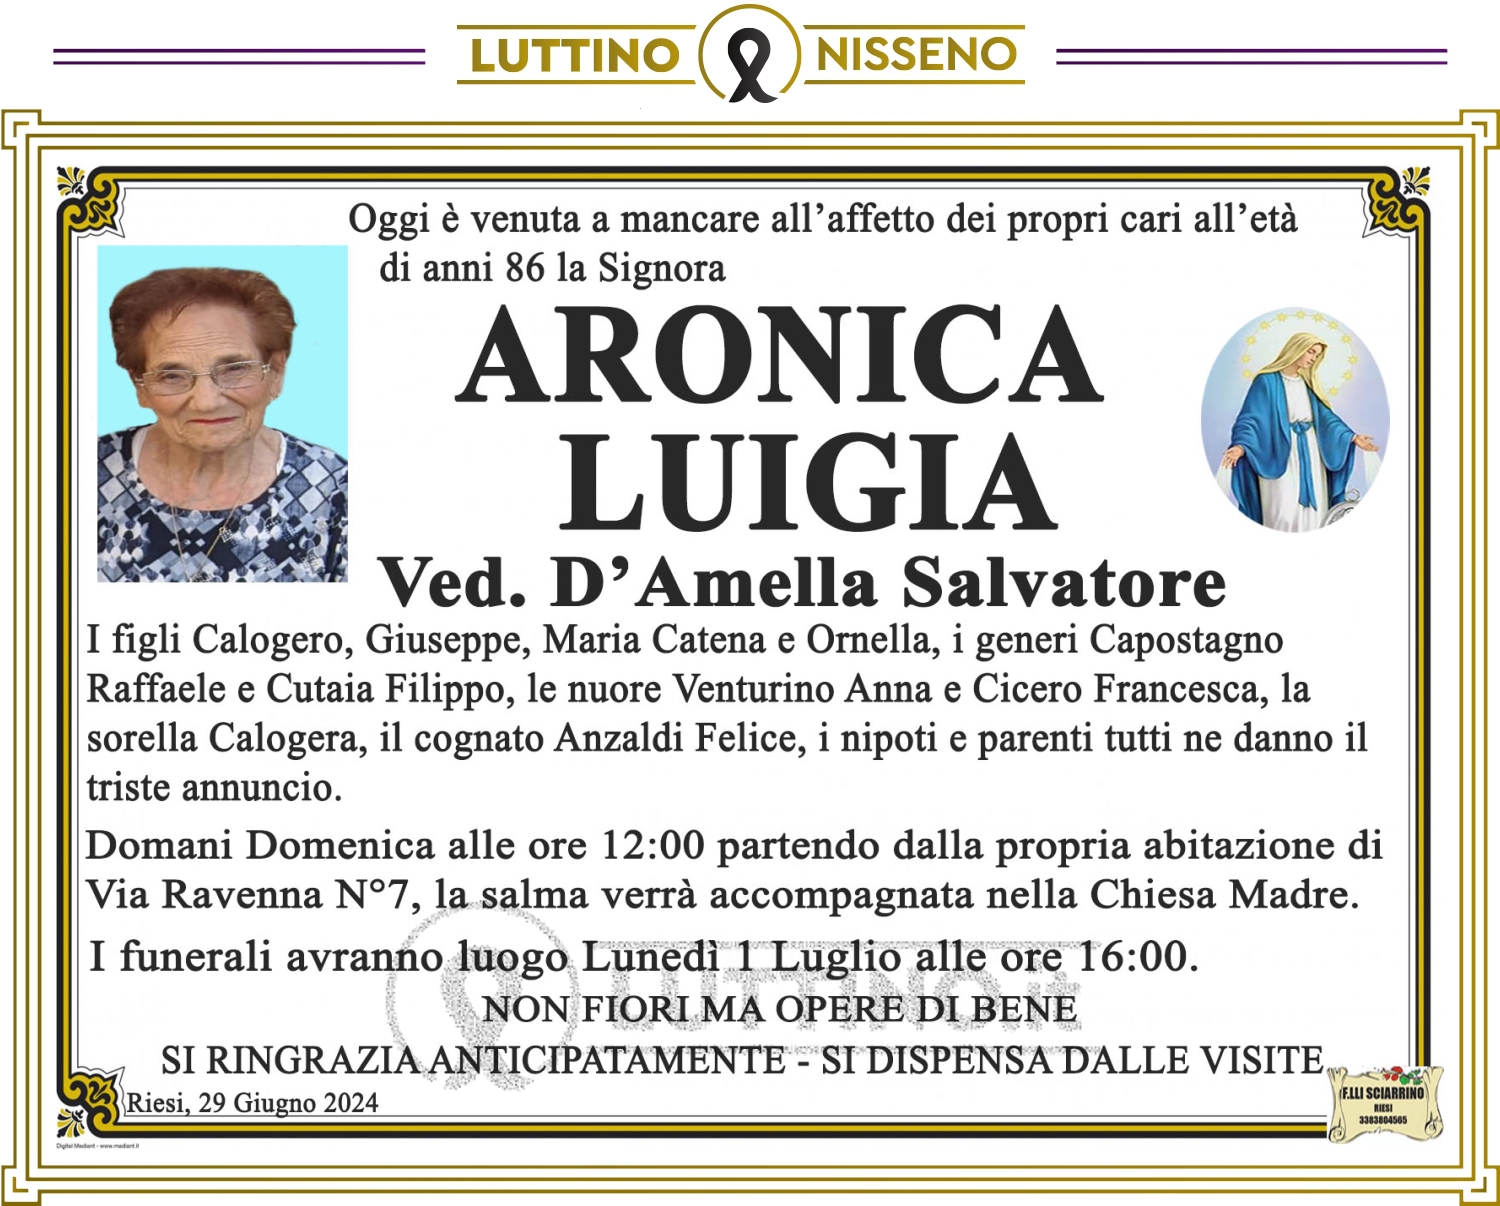 Luigia Aronica